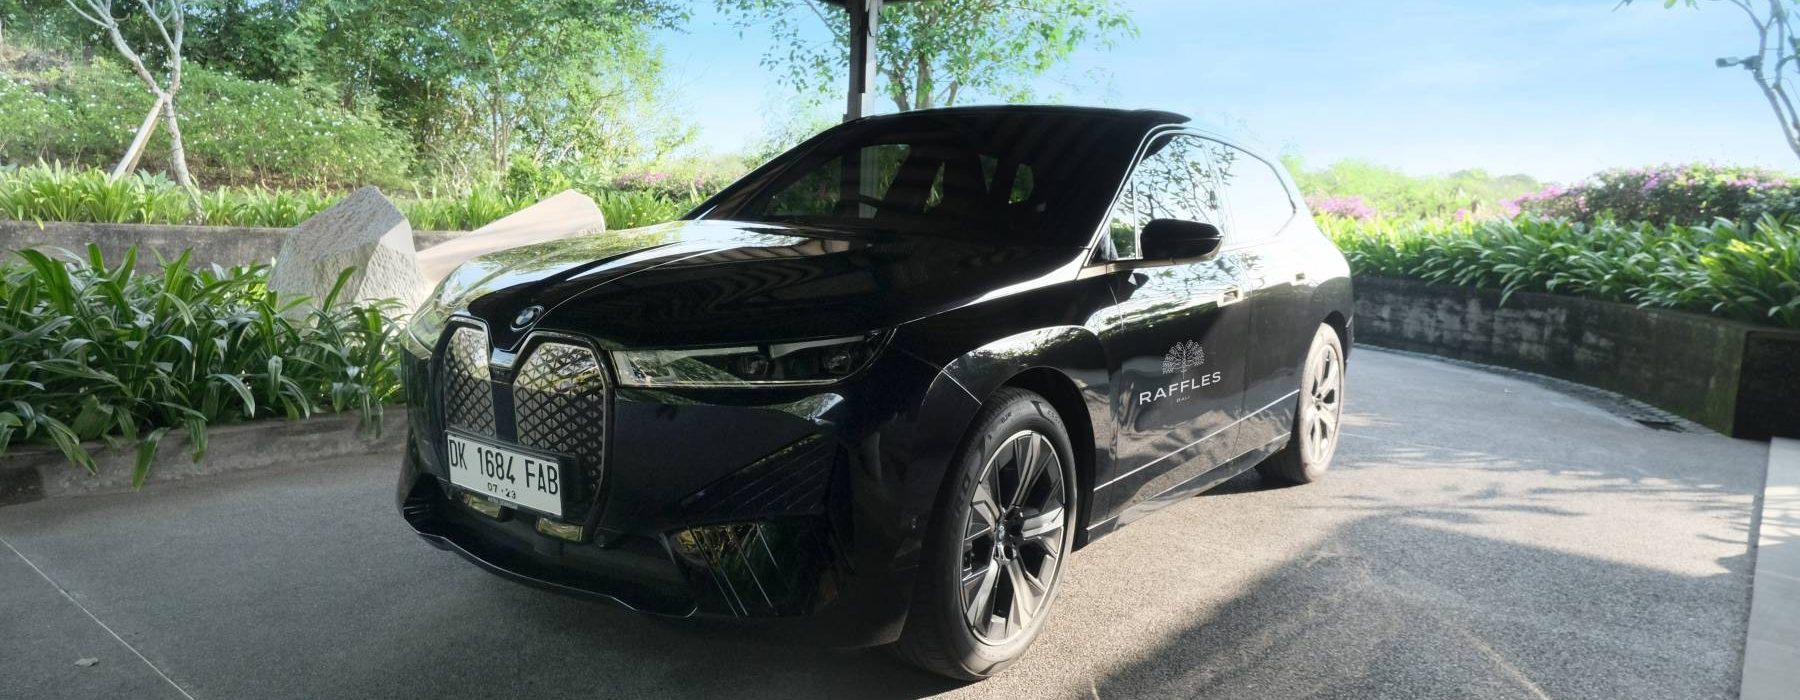 Raffles Bali - Raffles Bali Introduces BMW iX Luxury Electric Car to Drive the Sustainability Movement